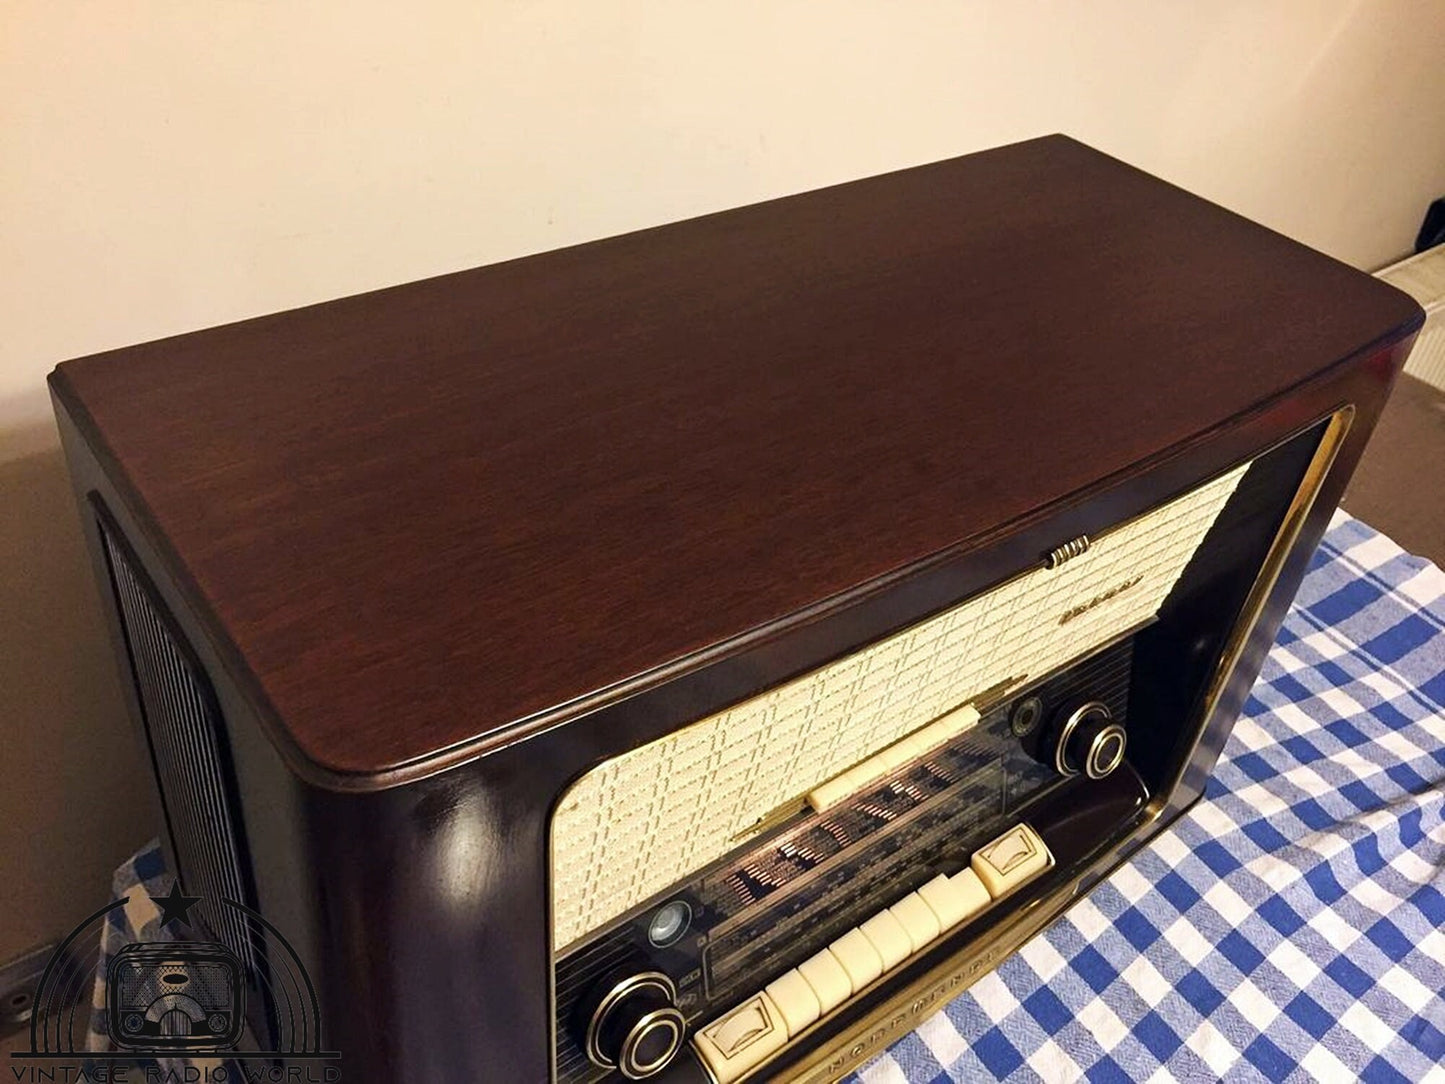 Nordmende Carmen 57 - Vintage Radio with Original Design and Lamp Feature